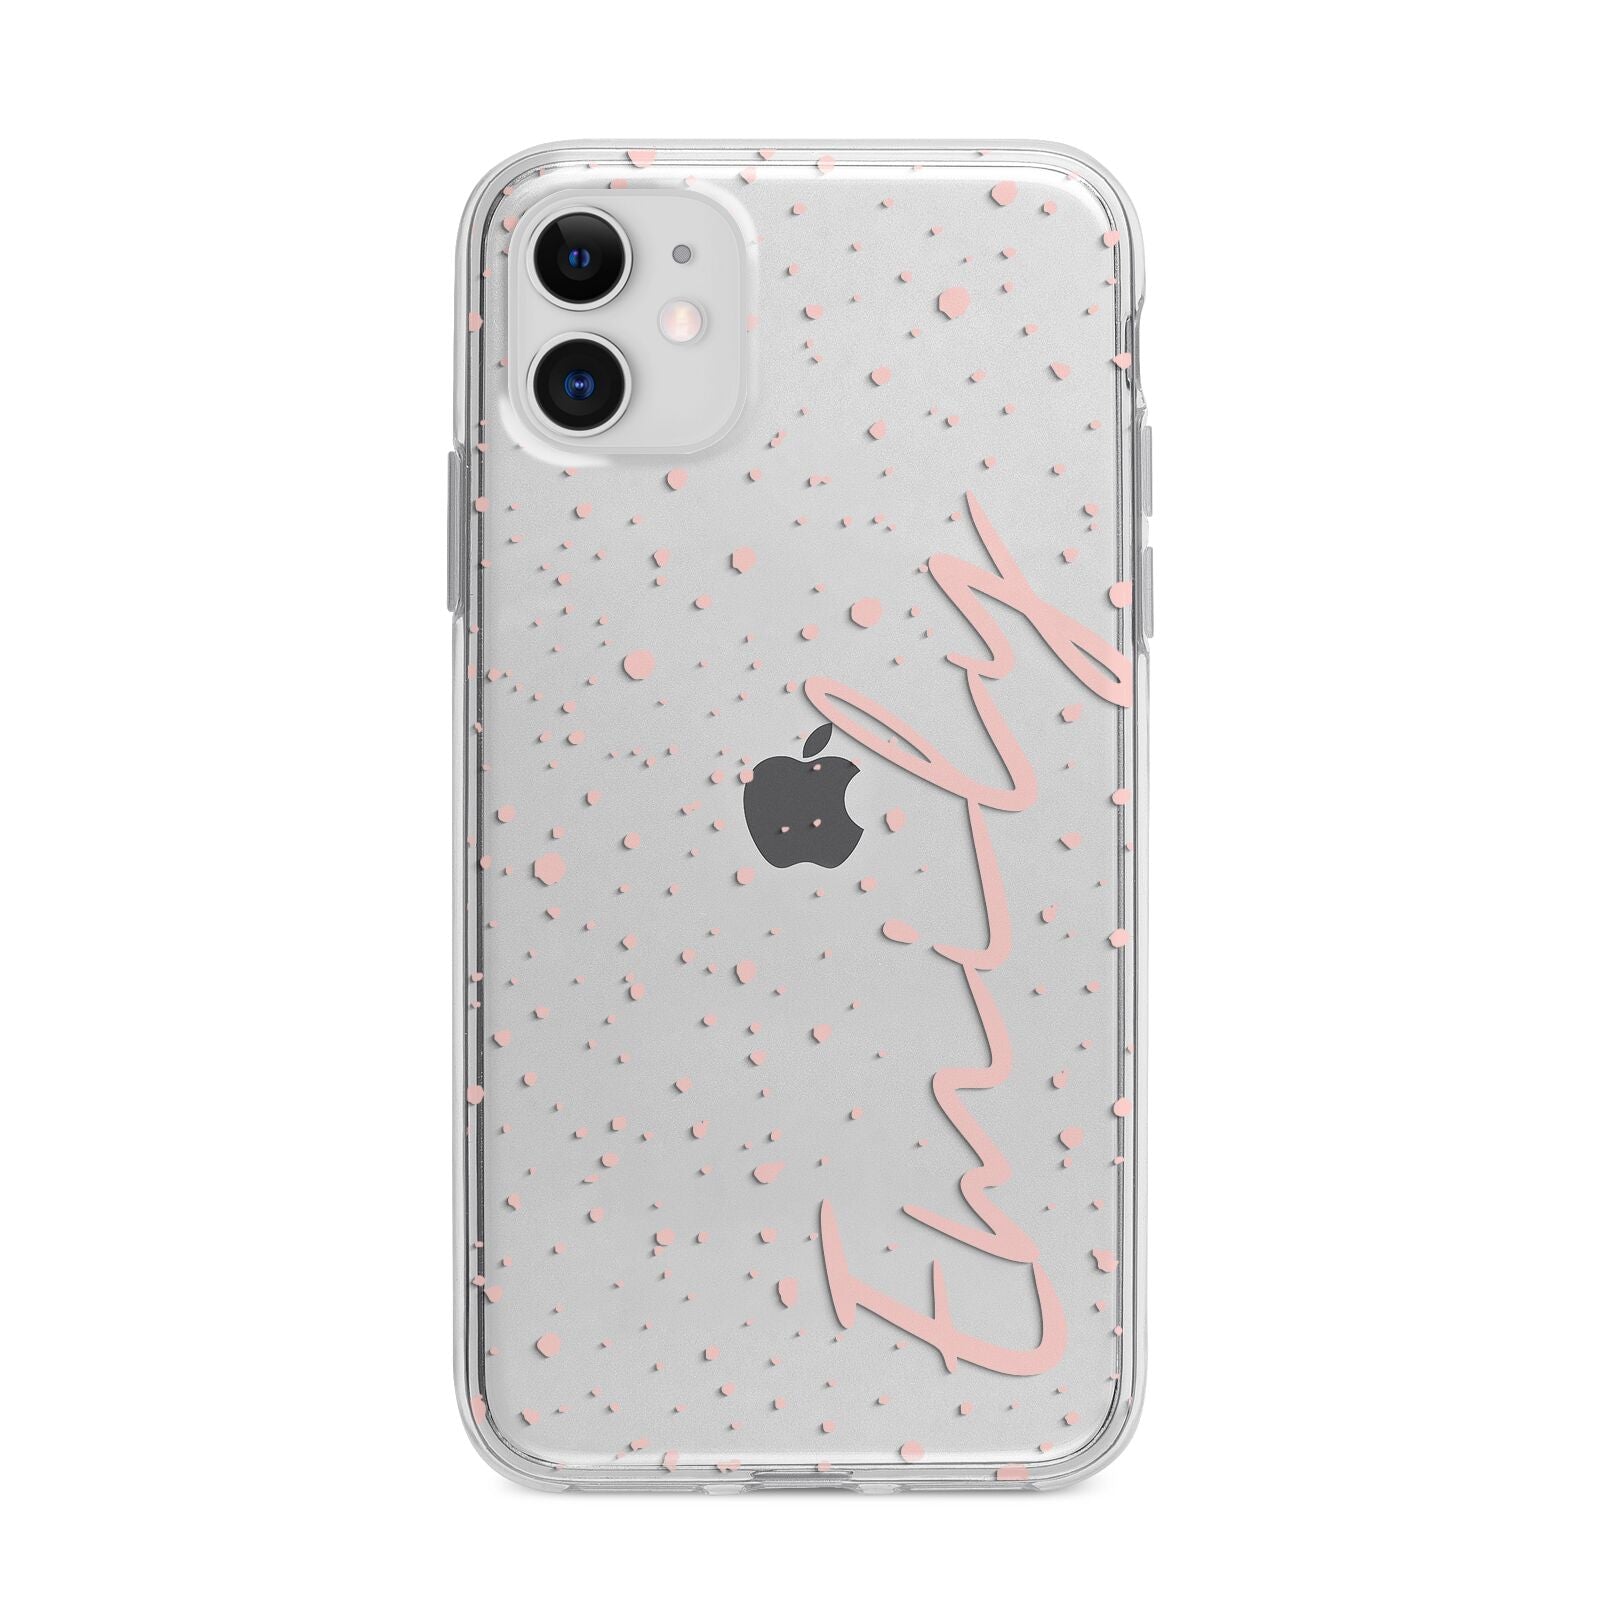 Custom Polka Dot Apple iPhone 11 in White with Bumper Case